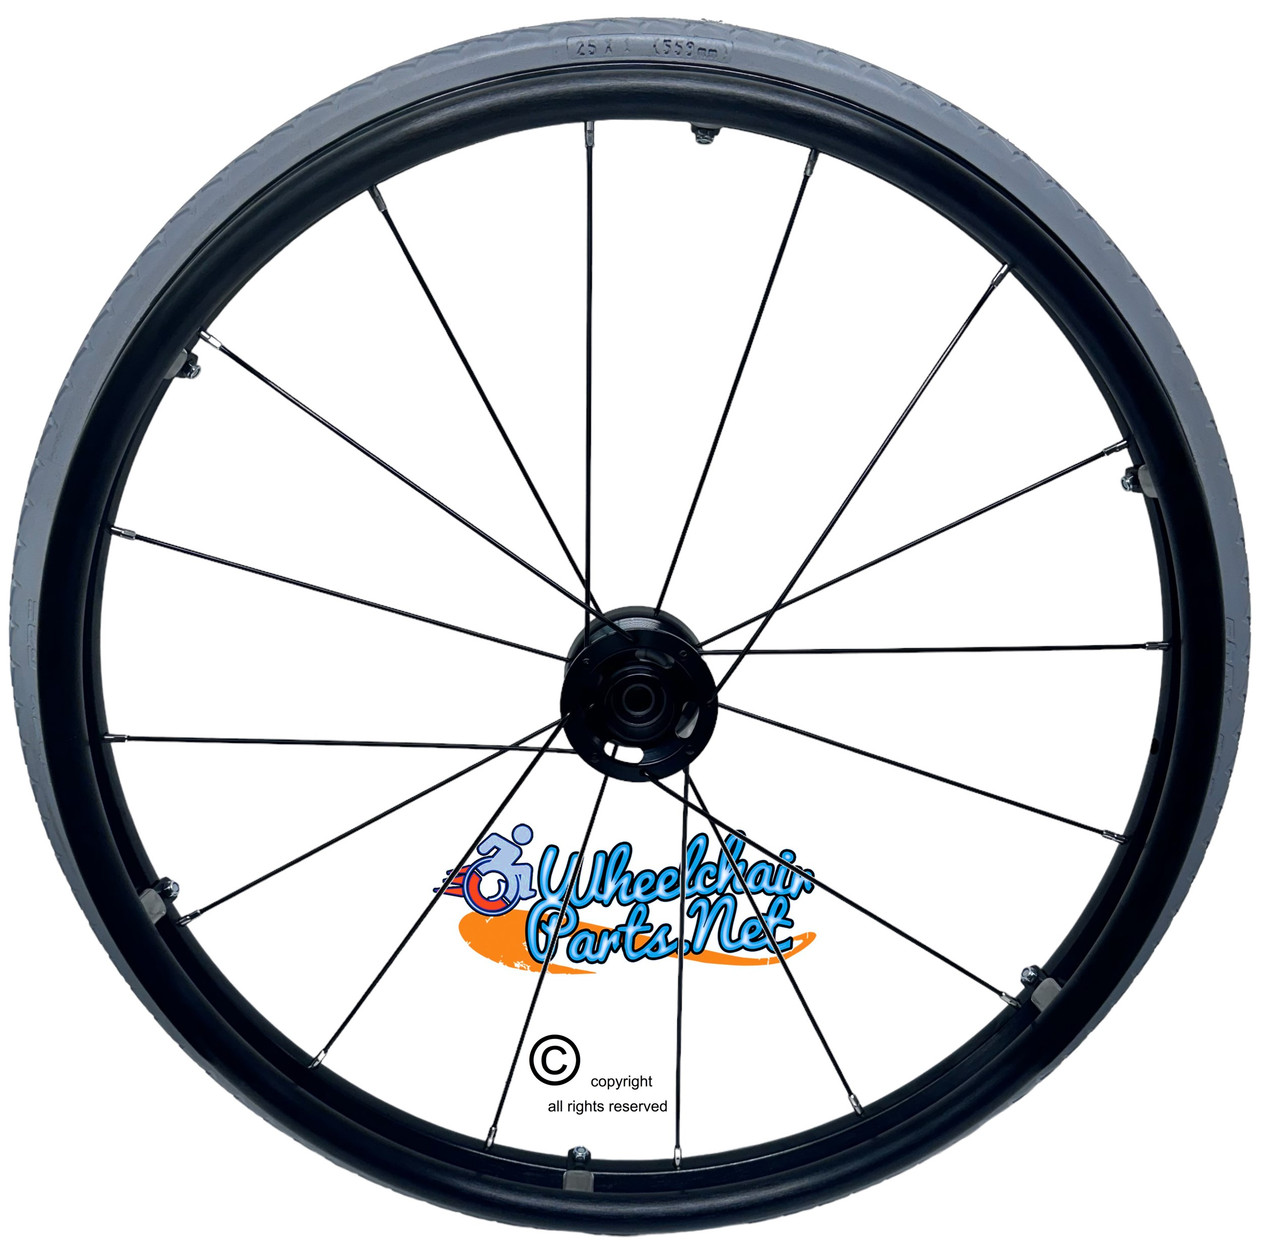 25" x 1"  (559) Swan® 16 Spoke Wheelchair Wheel With Shox G2 Grey, All Terrain Solid Tire- Set of 2